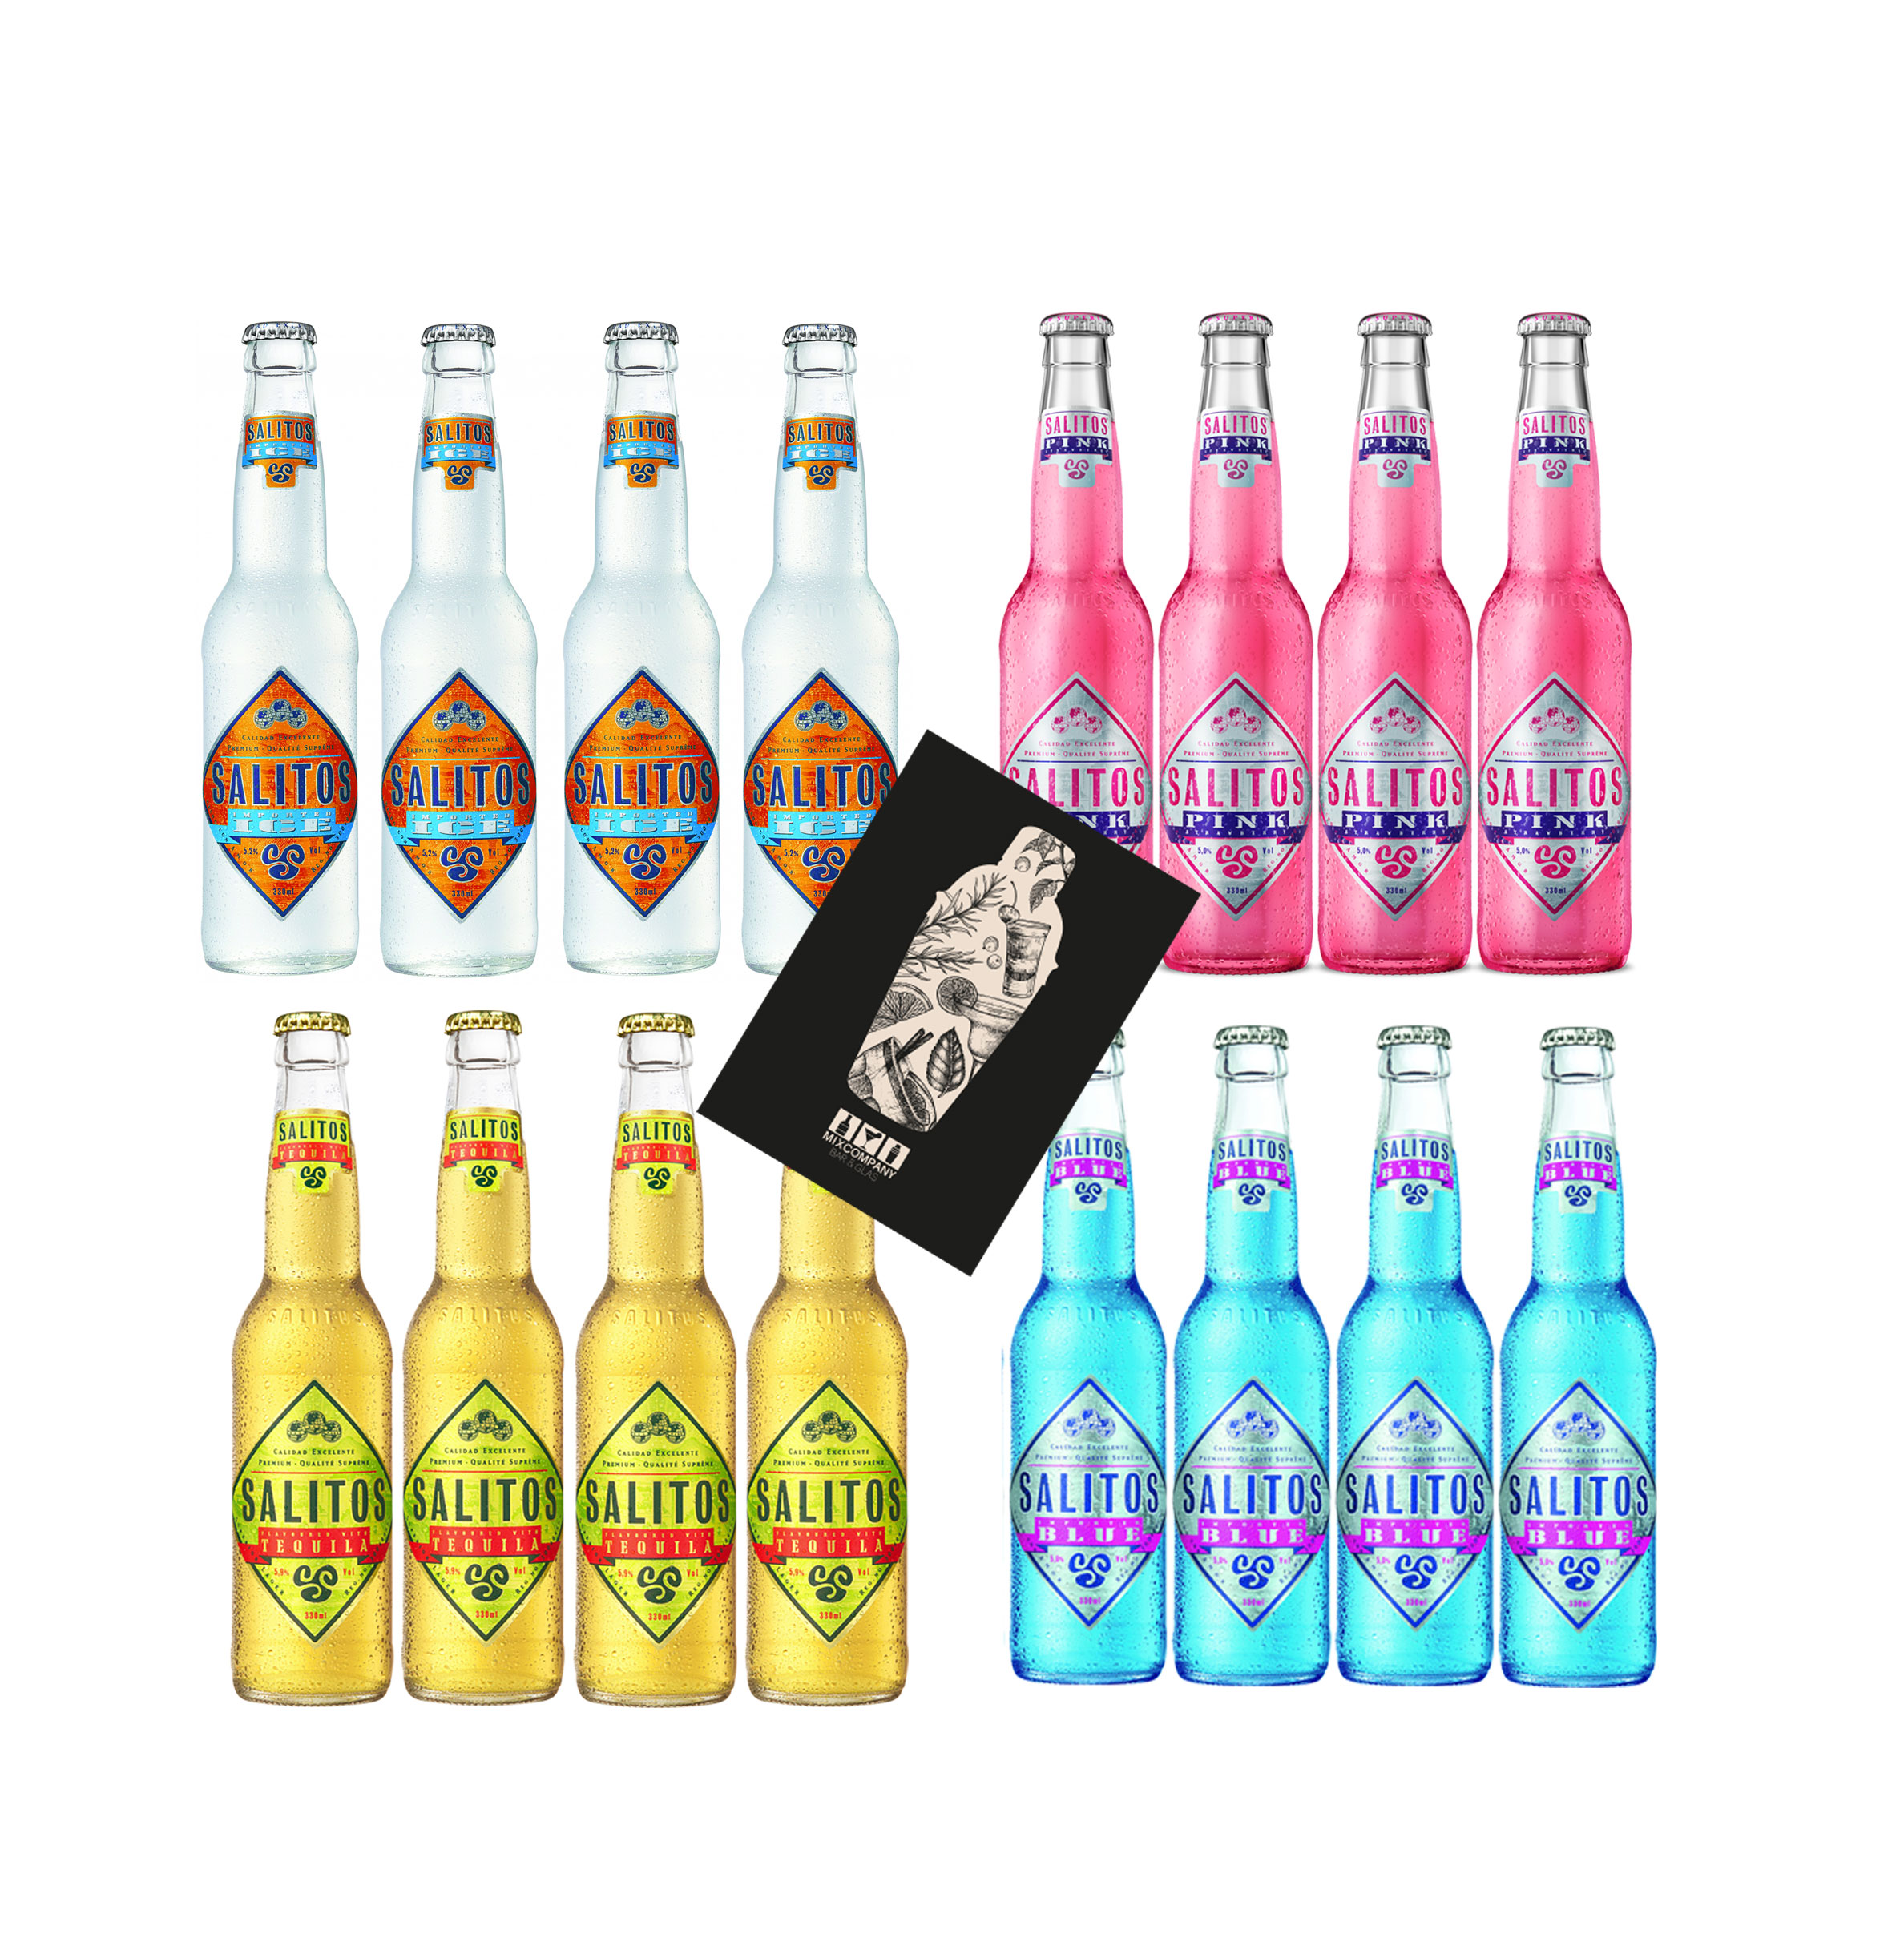 Salitos 16er Bier Mix Set 4 pro Sorte Blue +  Ice +  Tequila + Pink Beer je 0,33L (5% - 5,9%vol) inkl. Pfand MEHRWEG mit Mixcompany Grußkarte